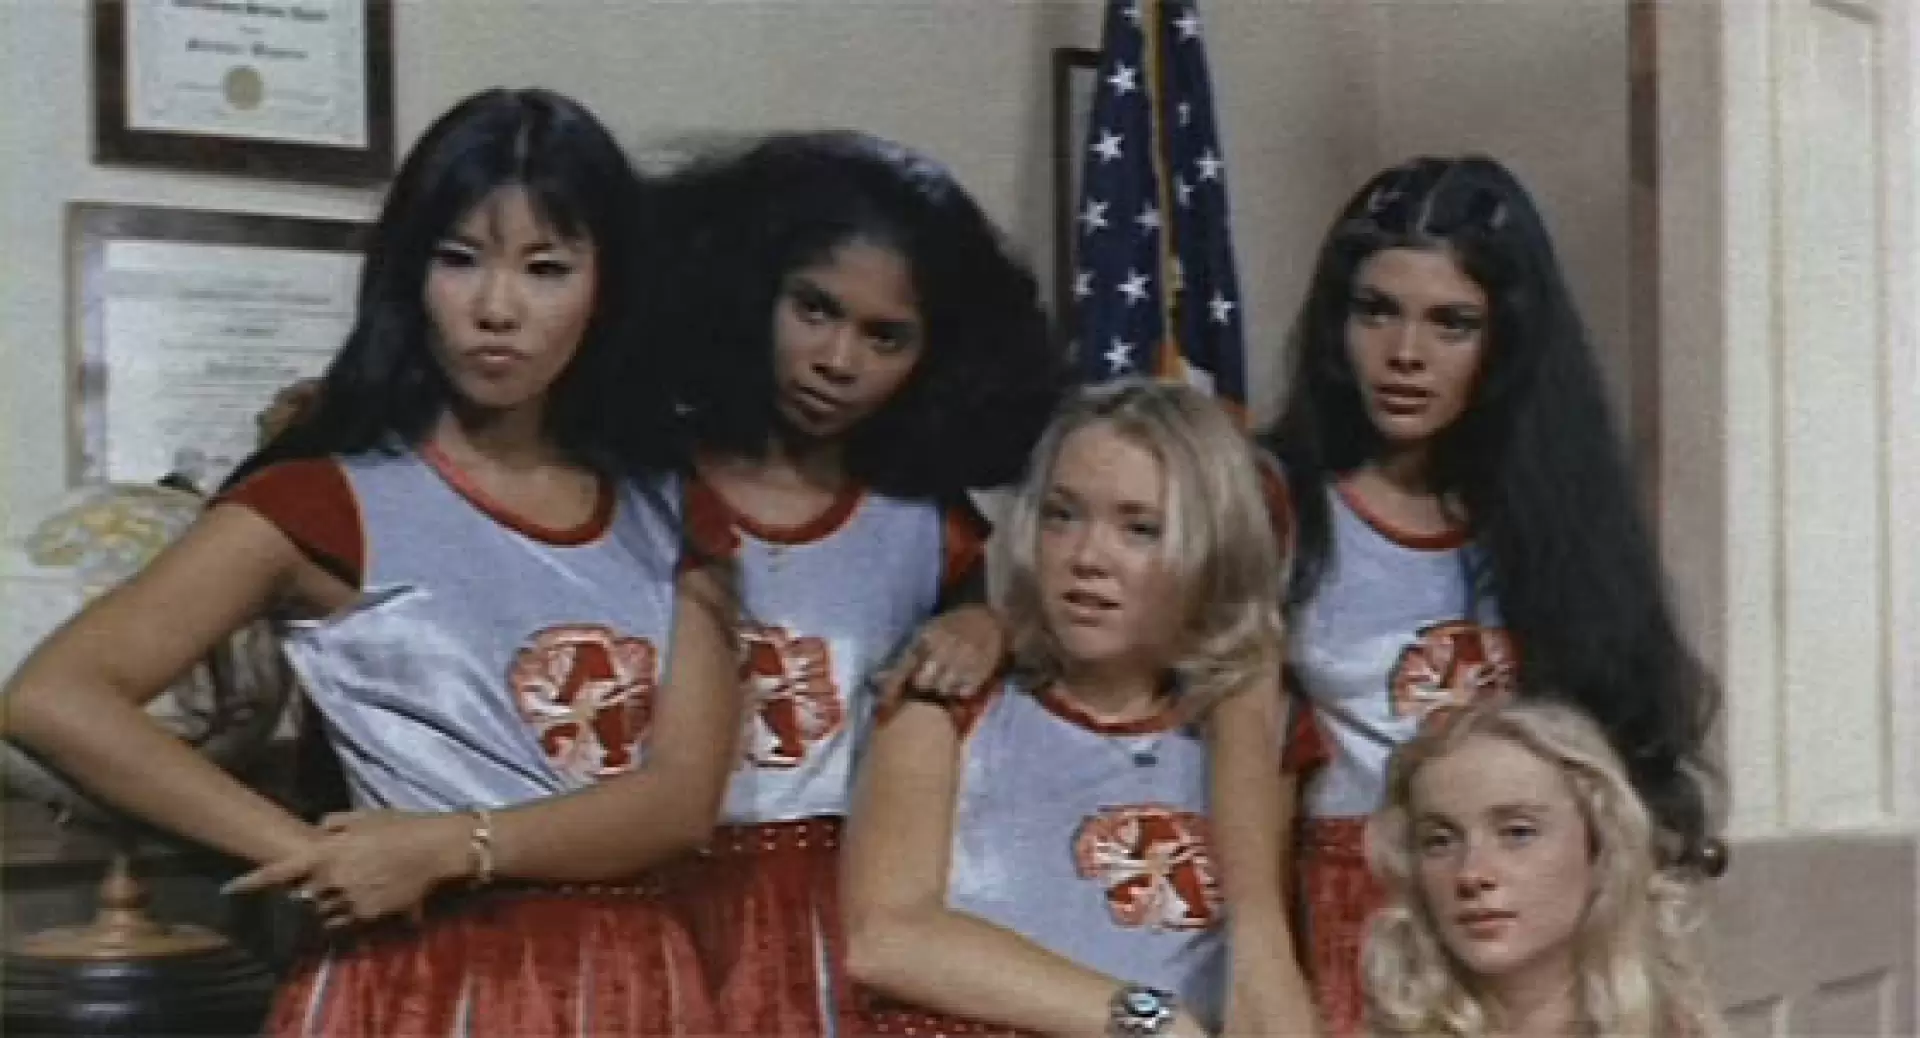 دانلود فیلم Revenge of the Cheerleaders 1976